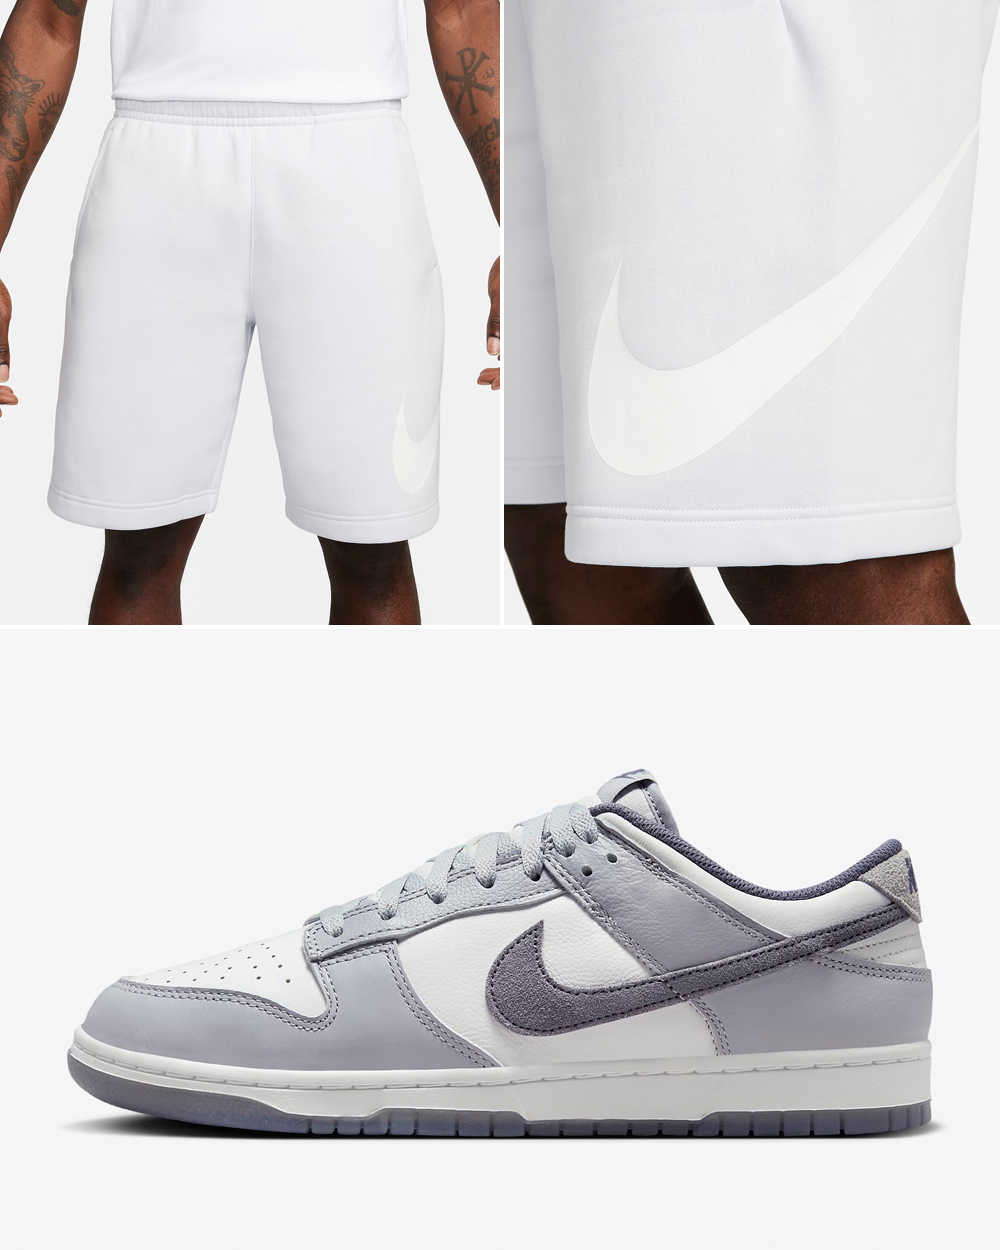 Nike-Dunk-Low-Light-Carbon-Fleece-Shorts-Outfit